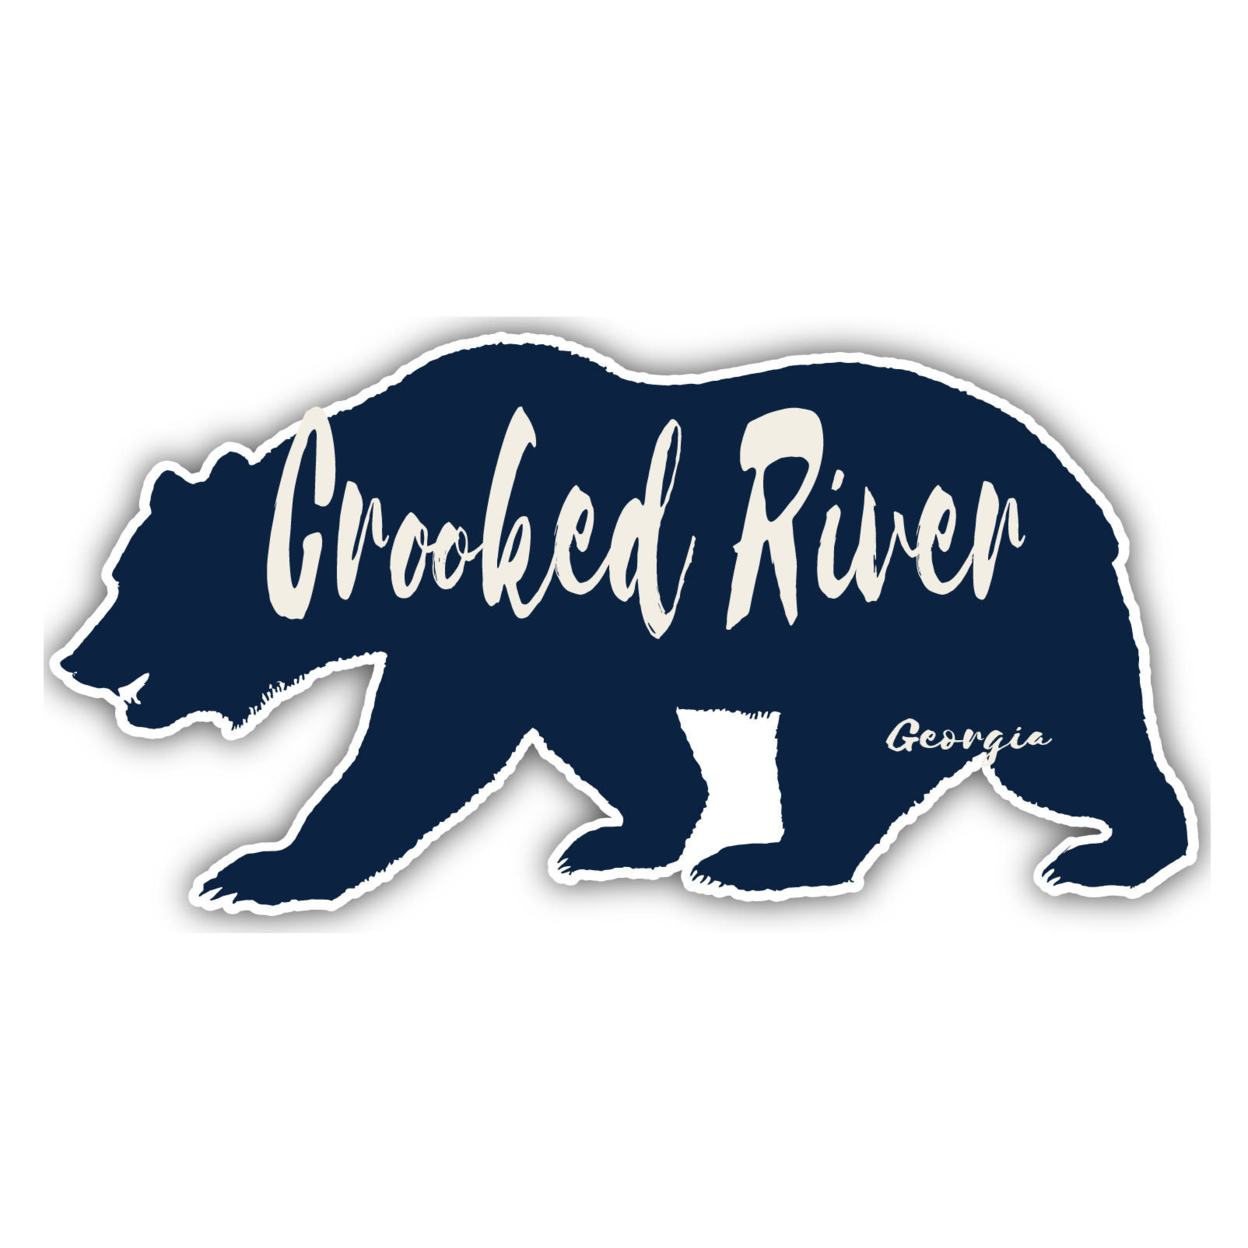 Crooked River Georgia Souvenir Decorative Stickers (Choose Theme And Size) - Single Unit, 12-Inch, Bear